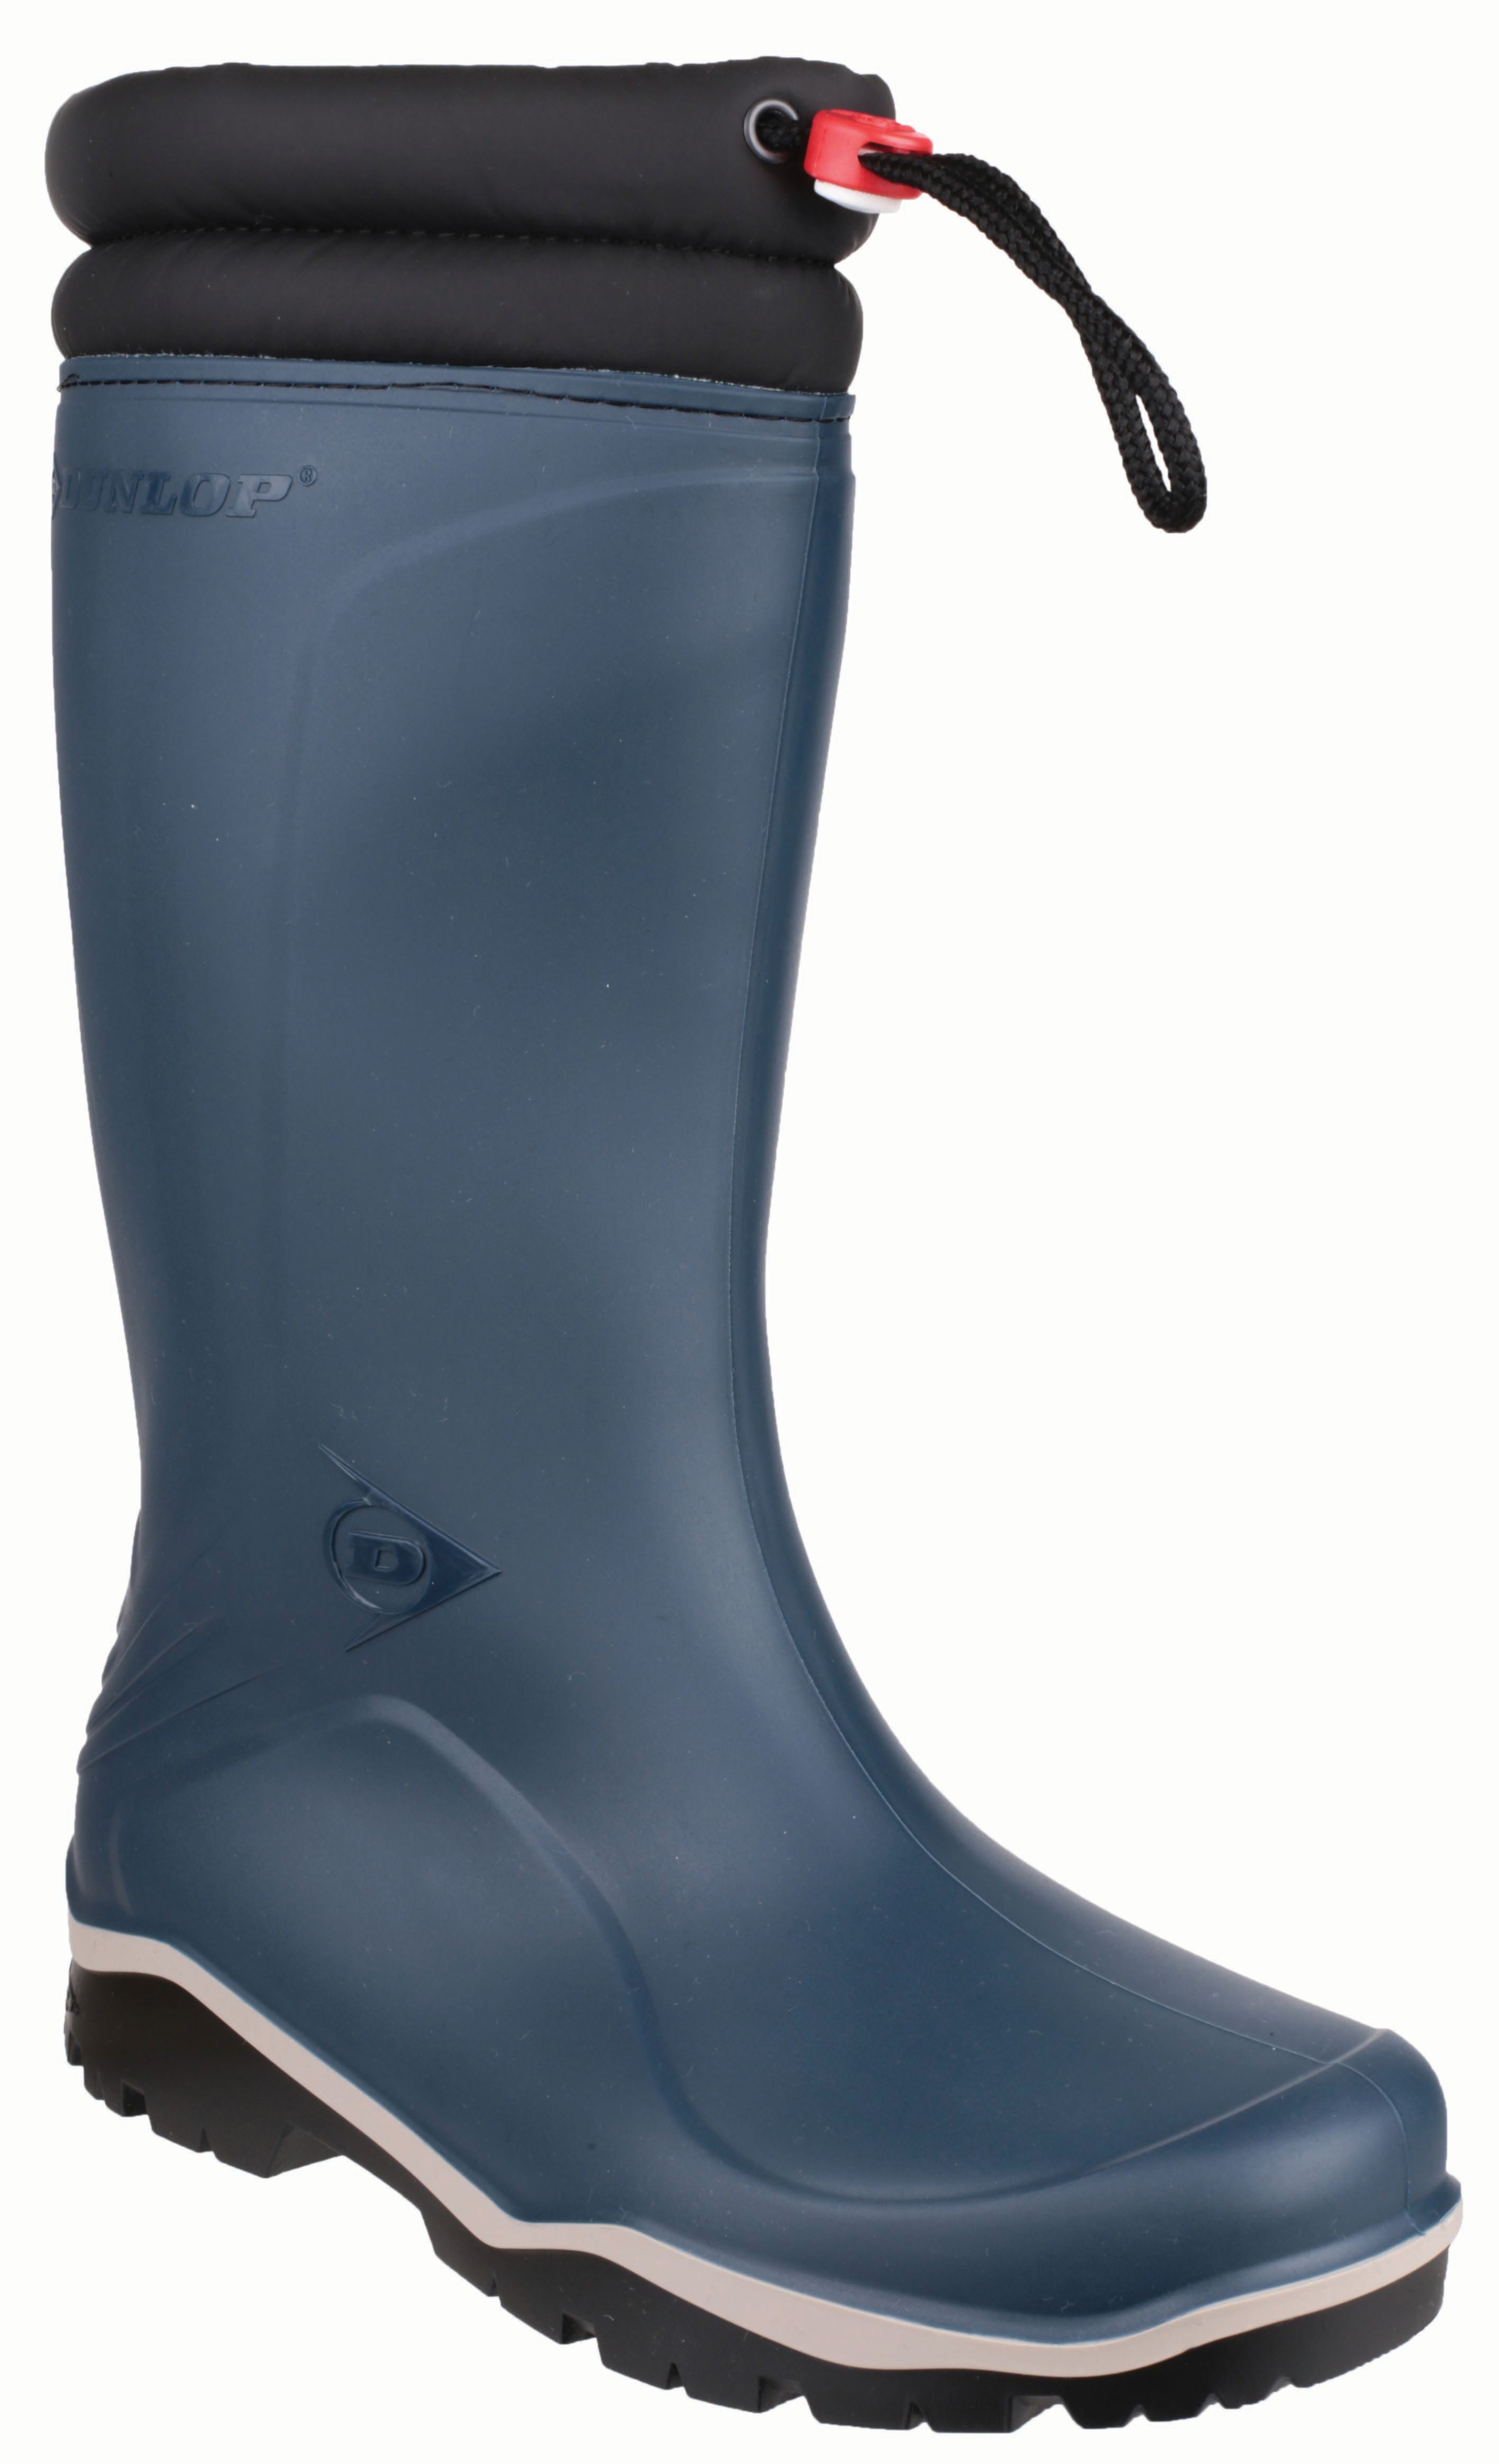 Dunlop Blizzard Winter Wellington Boot - Blue/Black Size 8